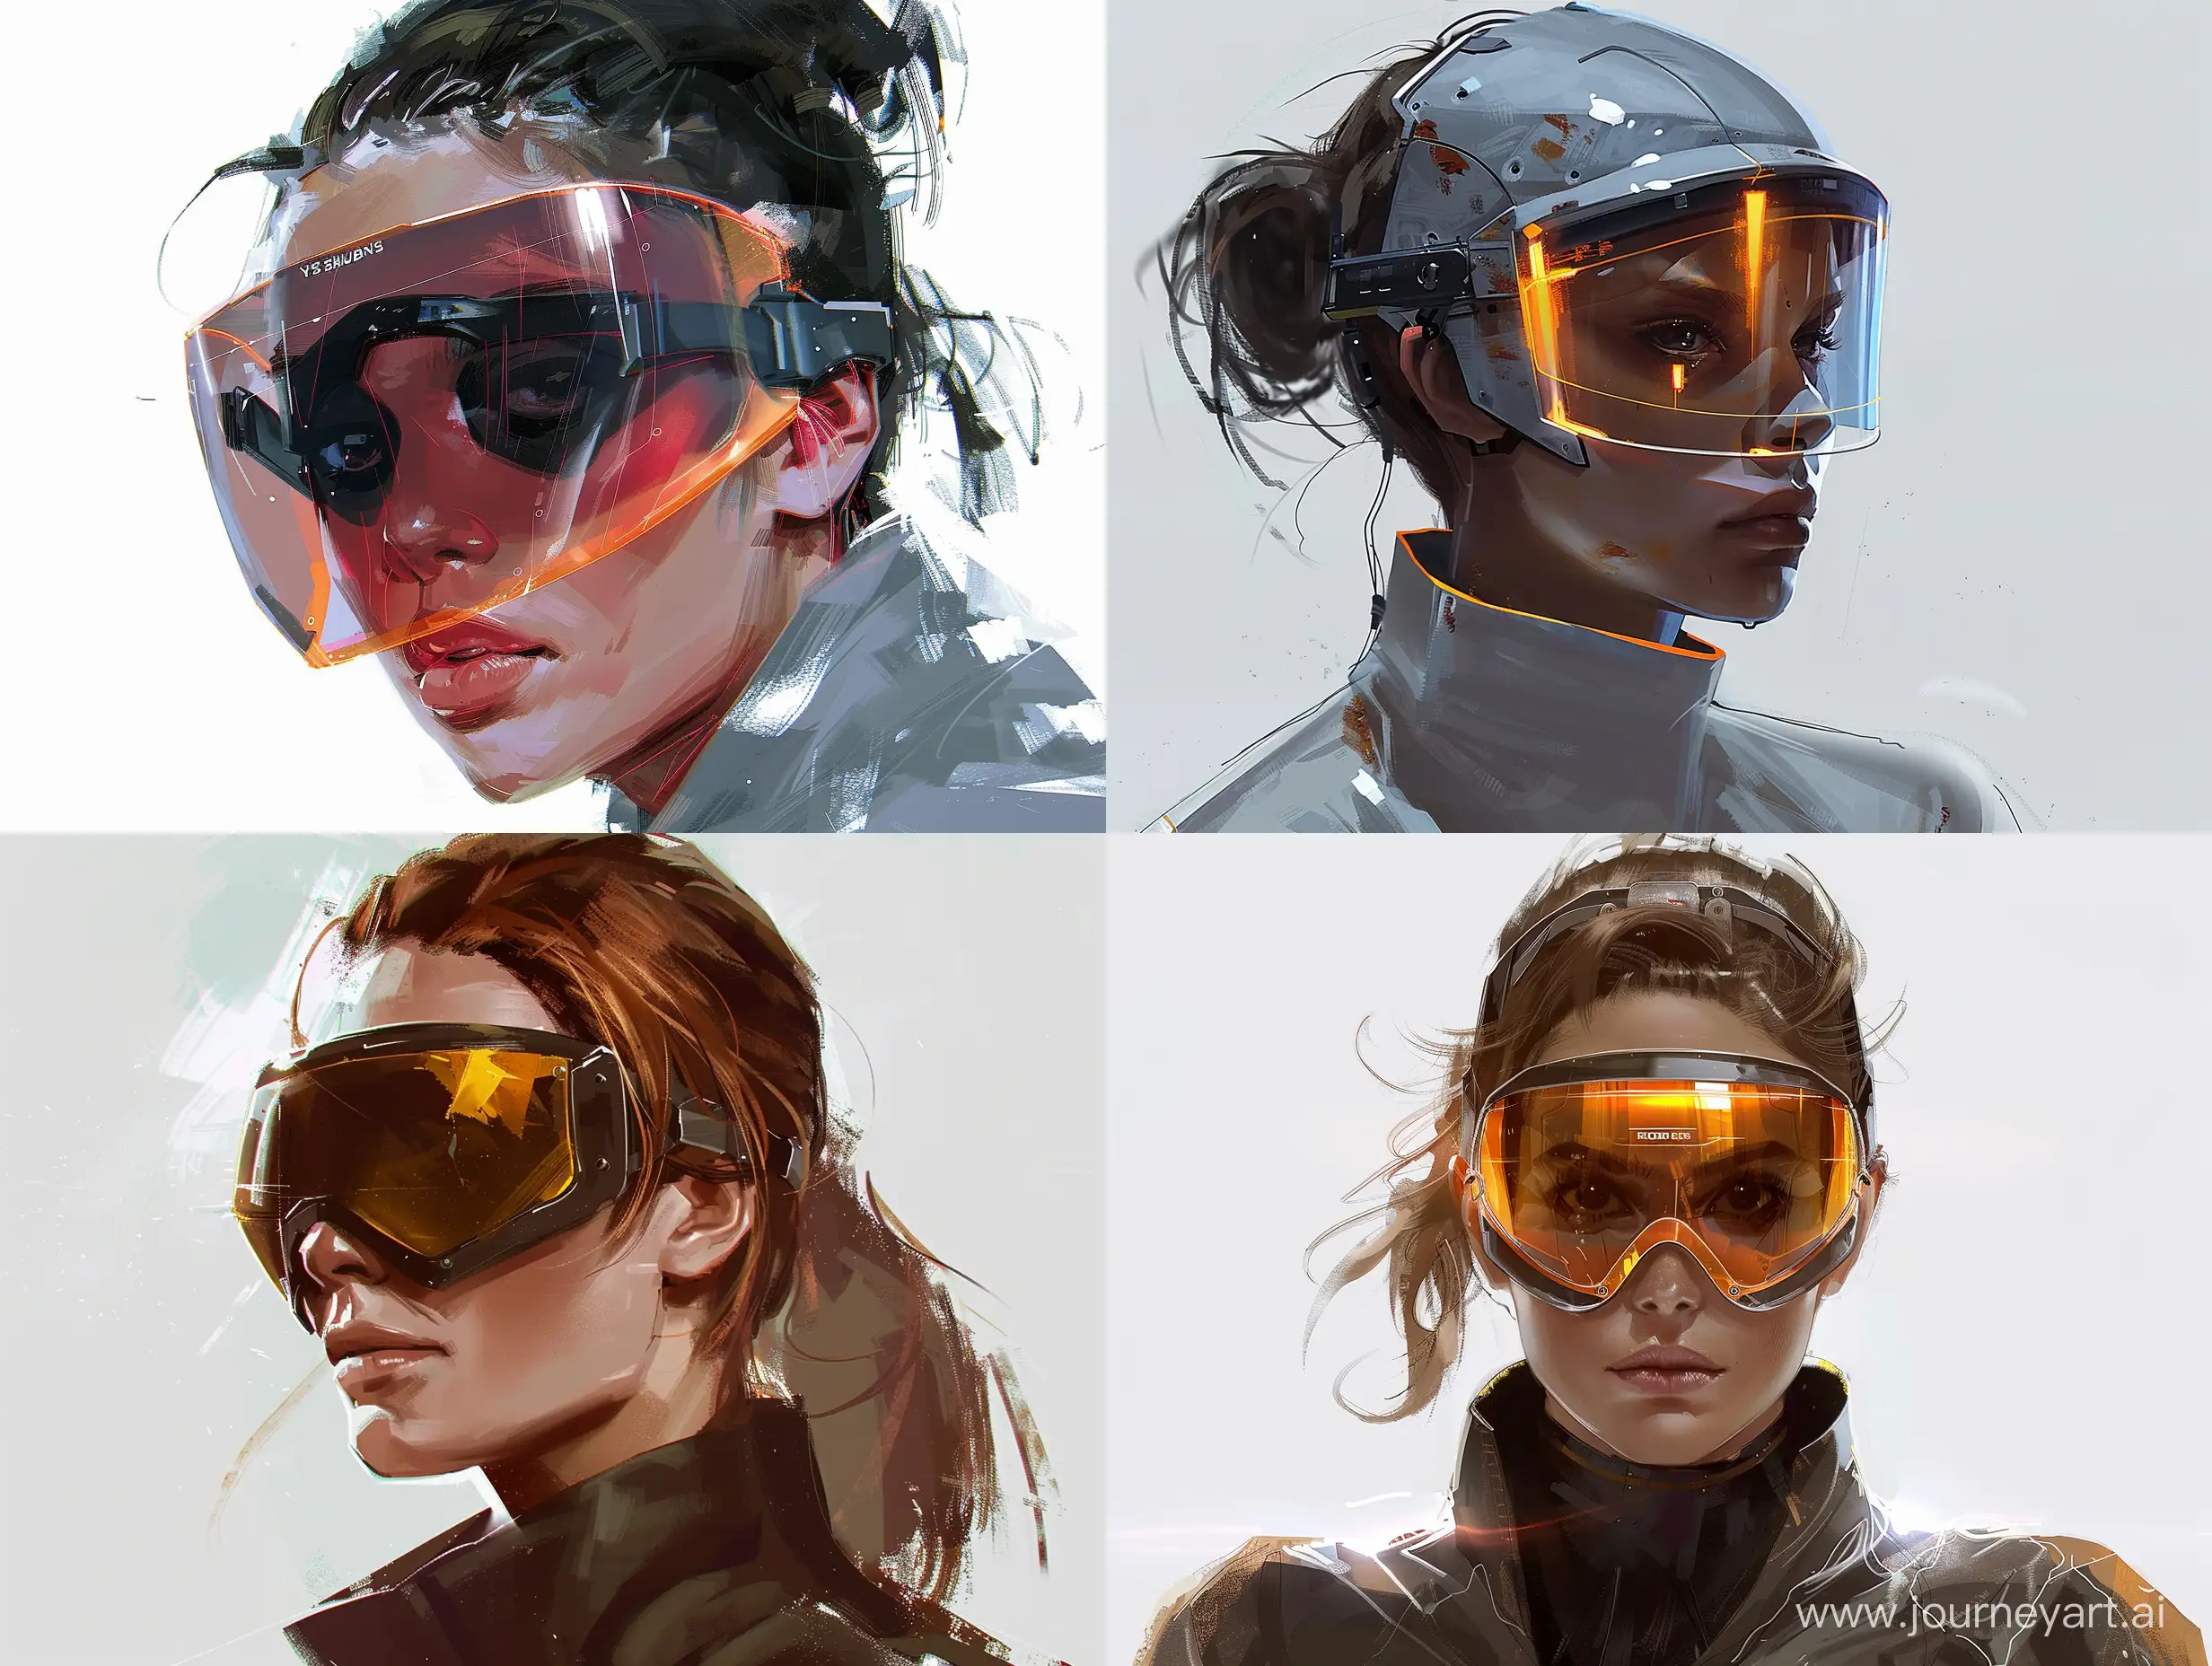 Futuristic-Female-Welder-Concept-Art-with-Safety-Glasses-in-Yoji-Shinkawa-Style